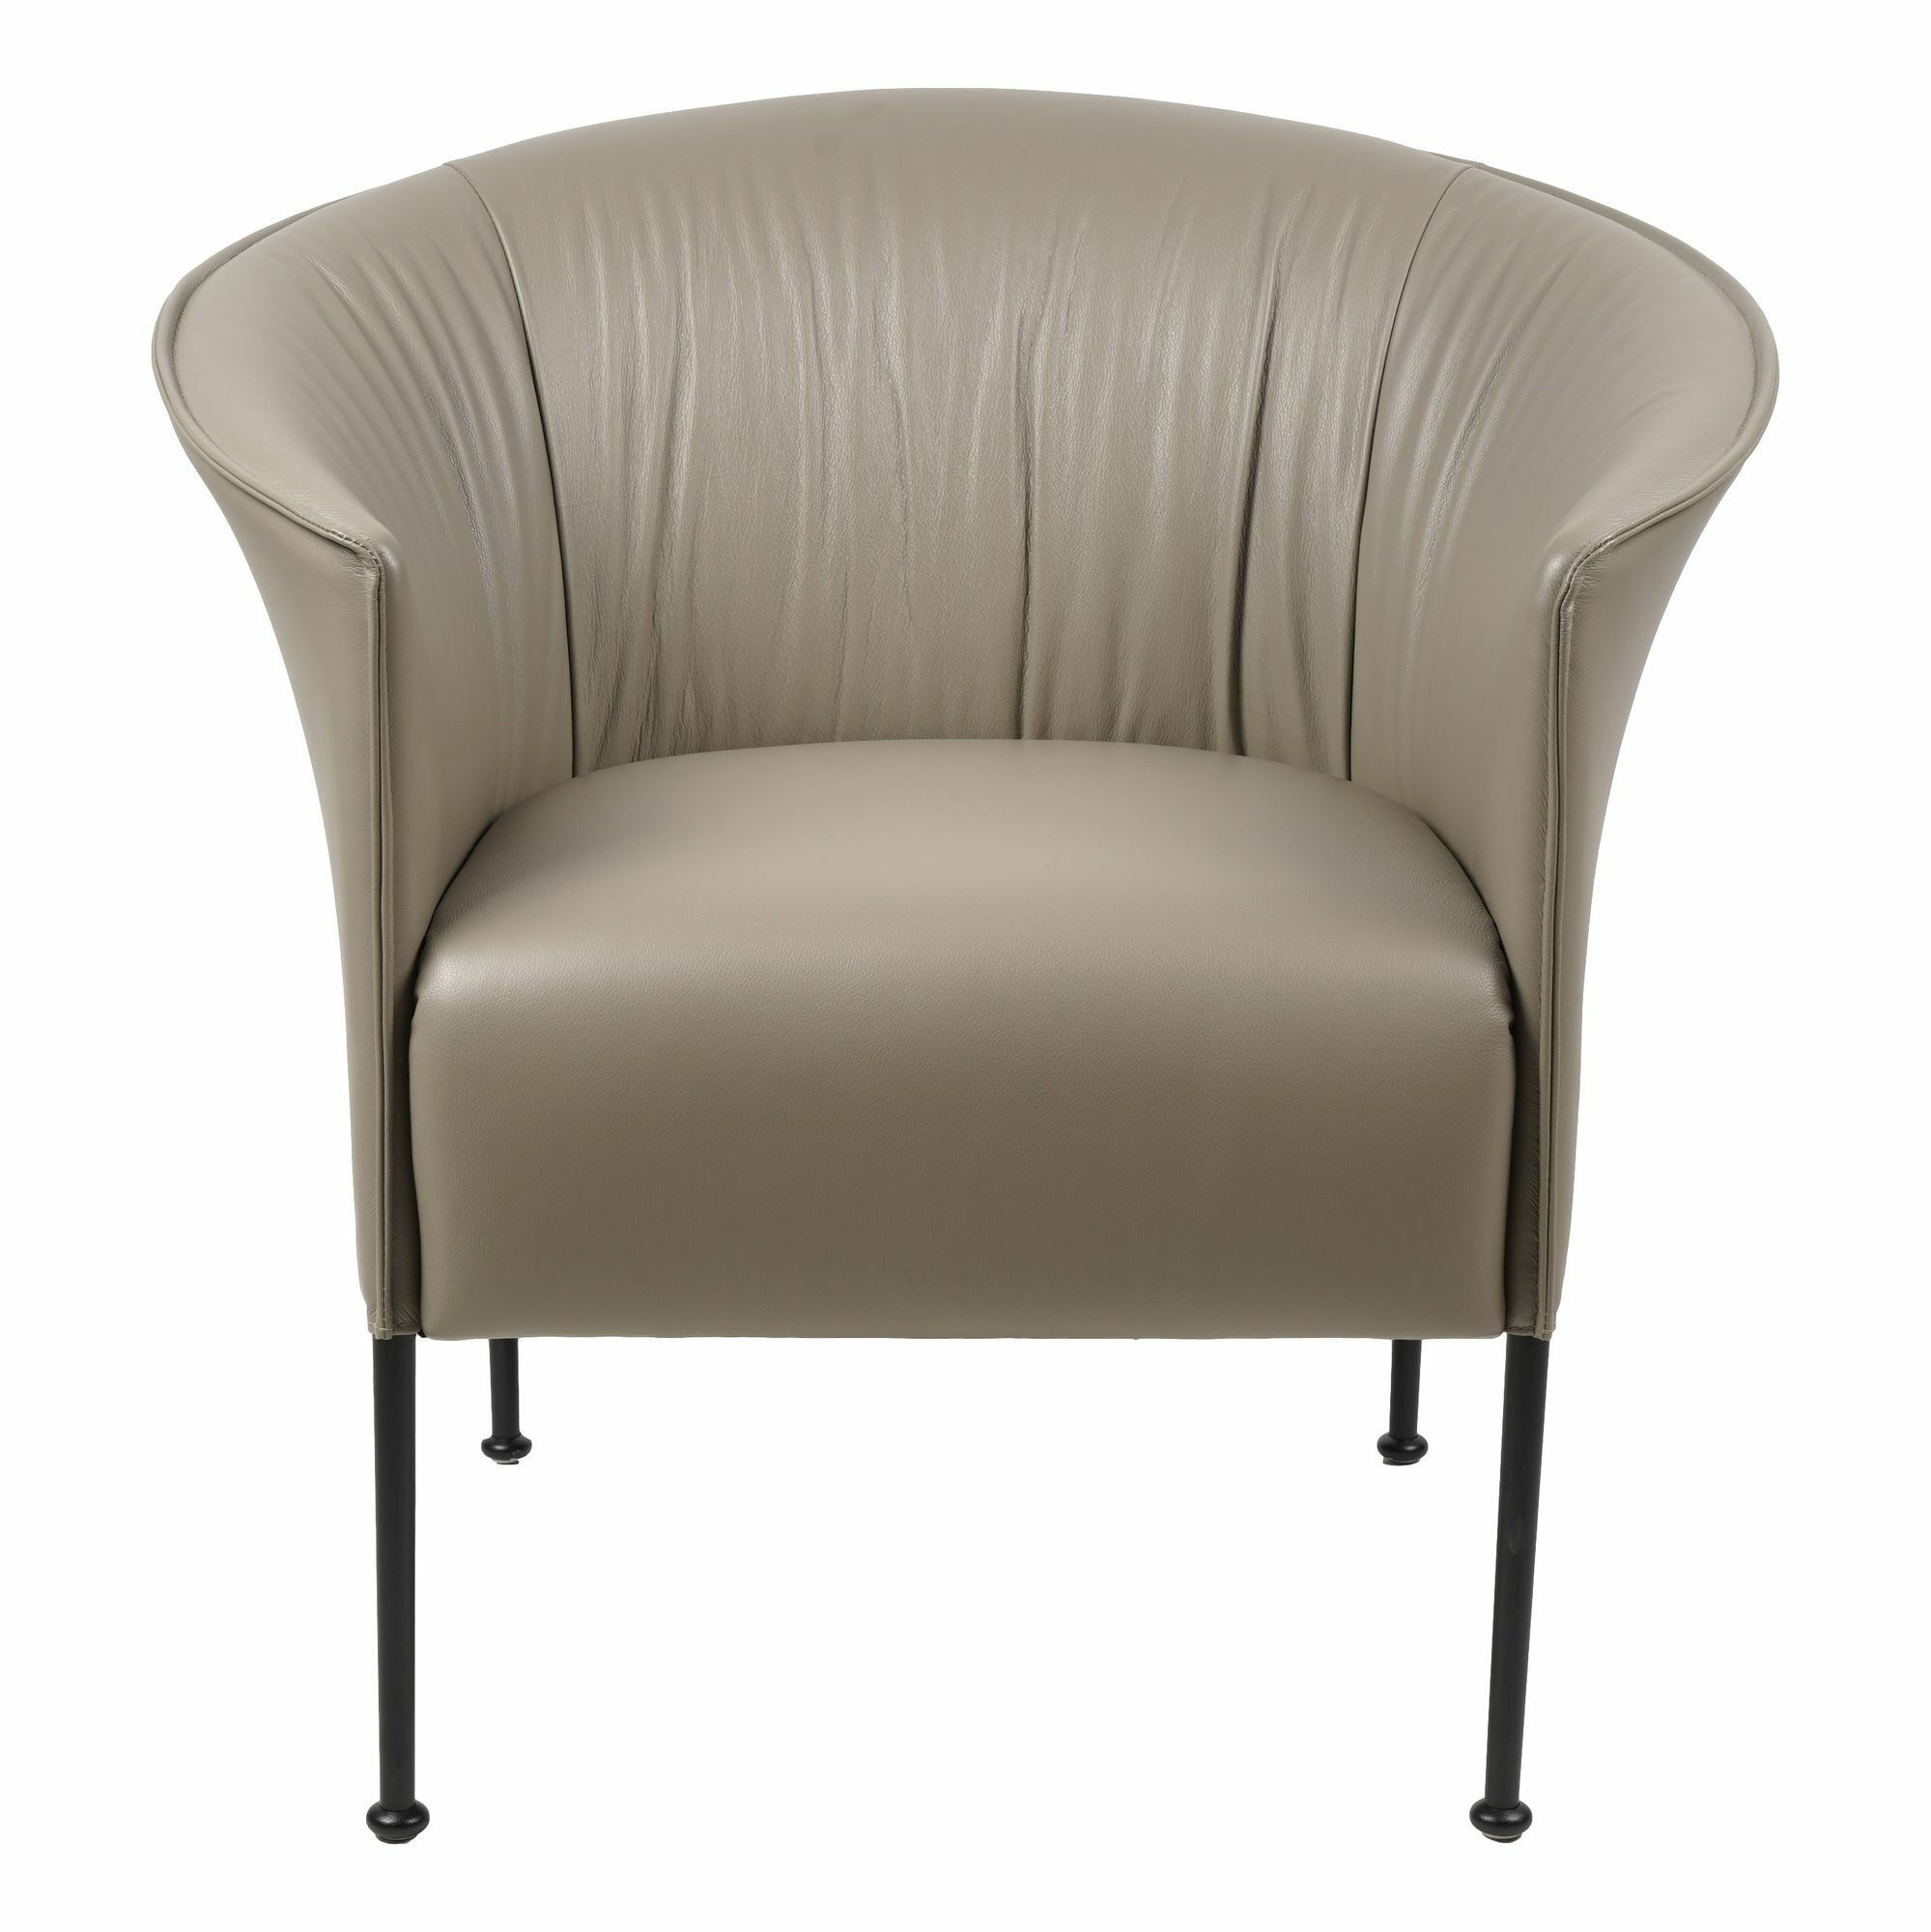 wittmann-sessel-lilian-fauteuil-casual-einfarbig-leder-color-taupe-fuesse-tiefschwarz-mf-0006184-001-4